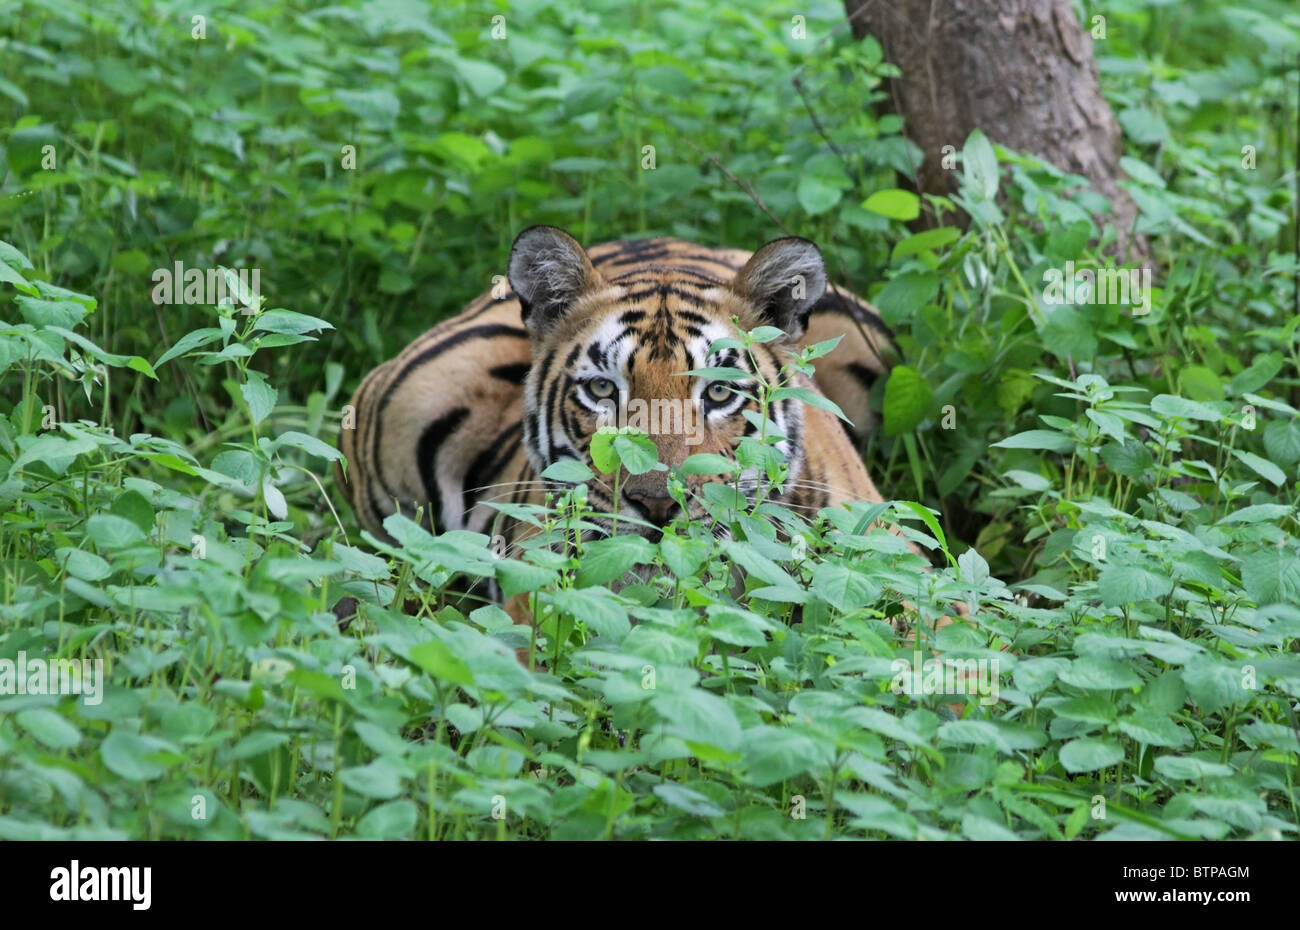 Tigress hiding in grass. Picture taken in Tadoba Andhari Tiger Reserve, India Stock Photo